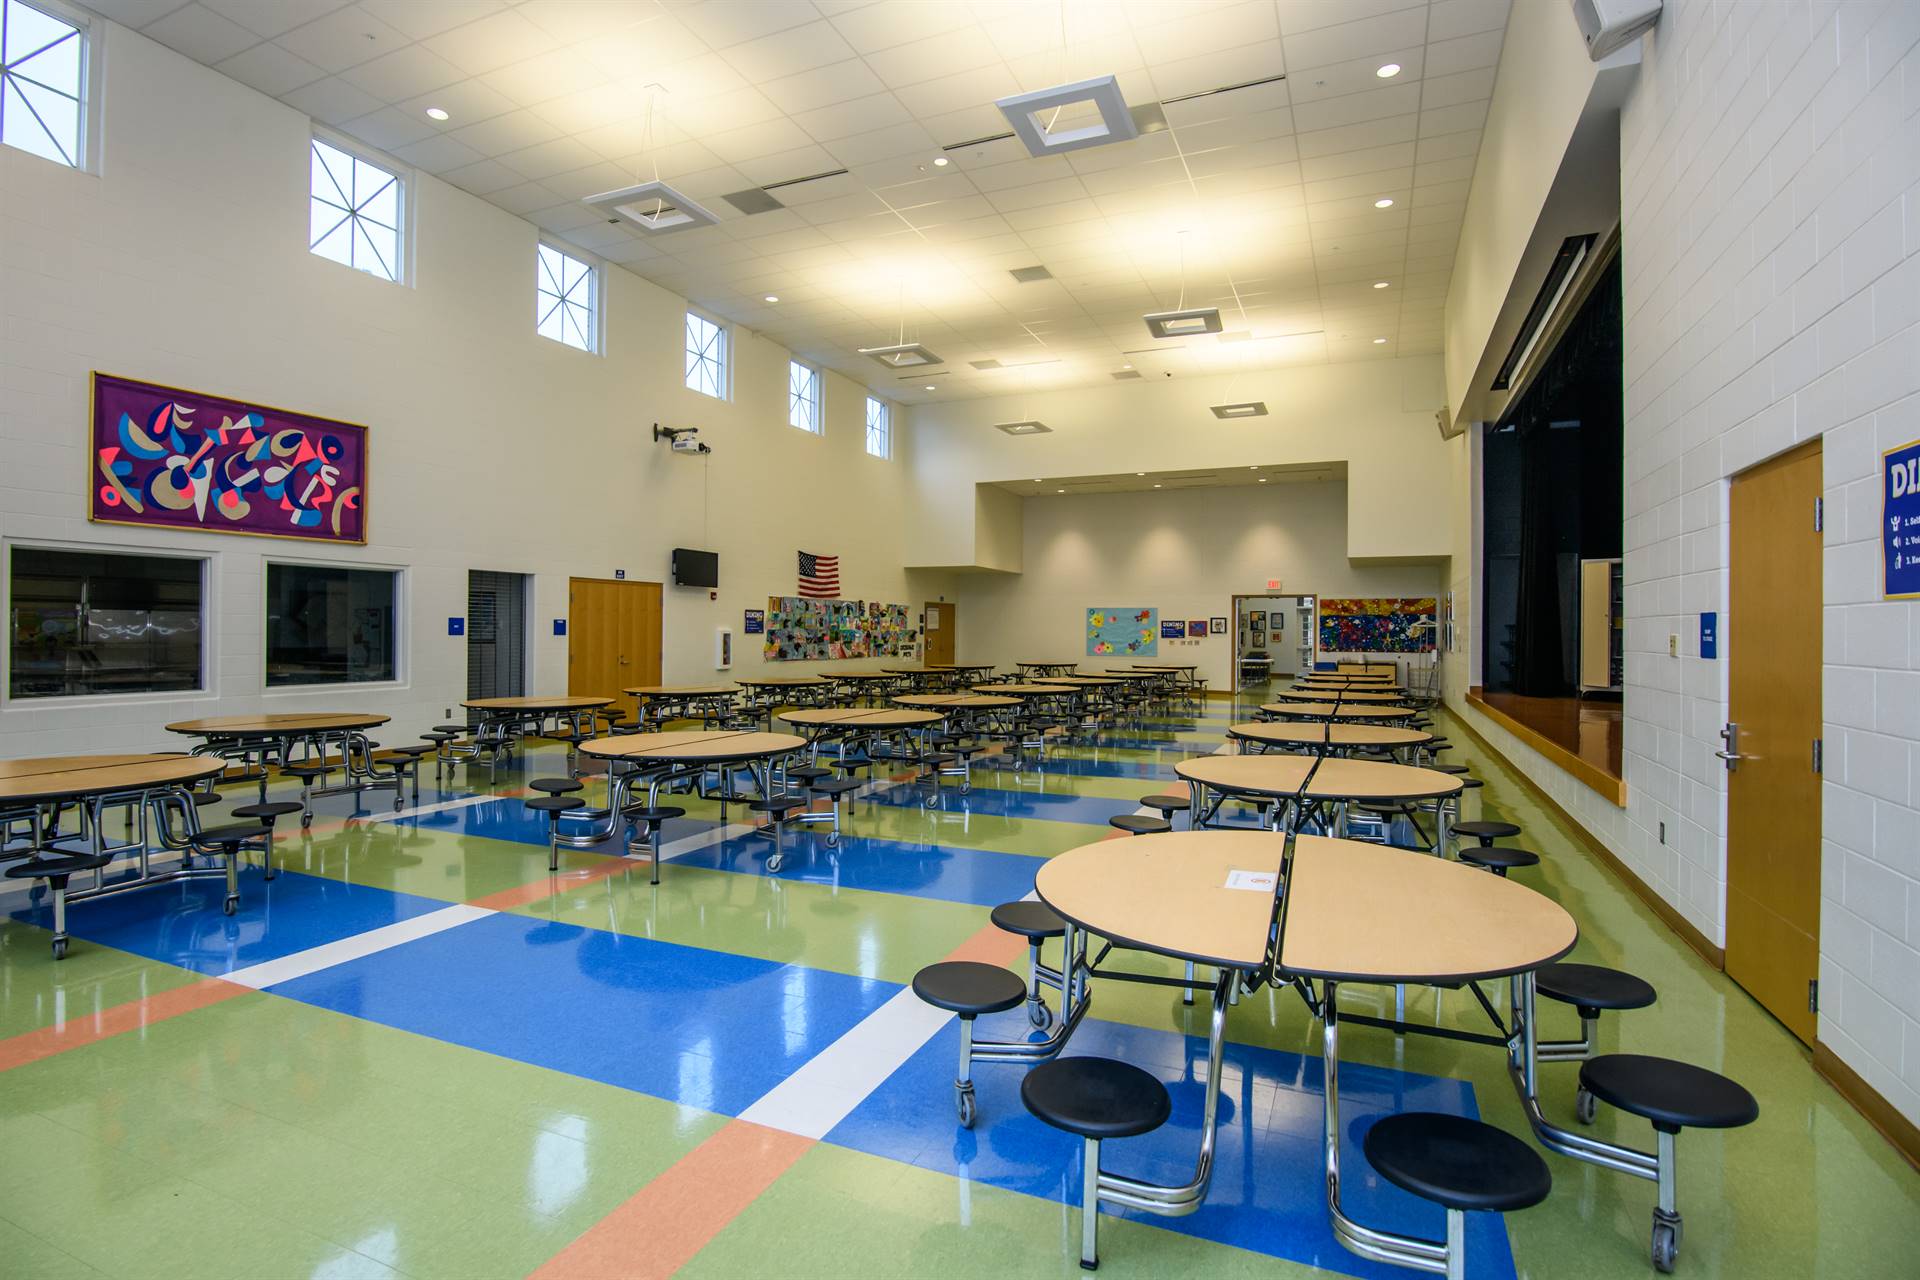 Terrace Park Elementary School cafeteria